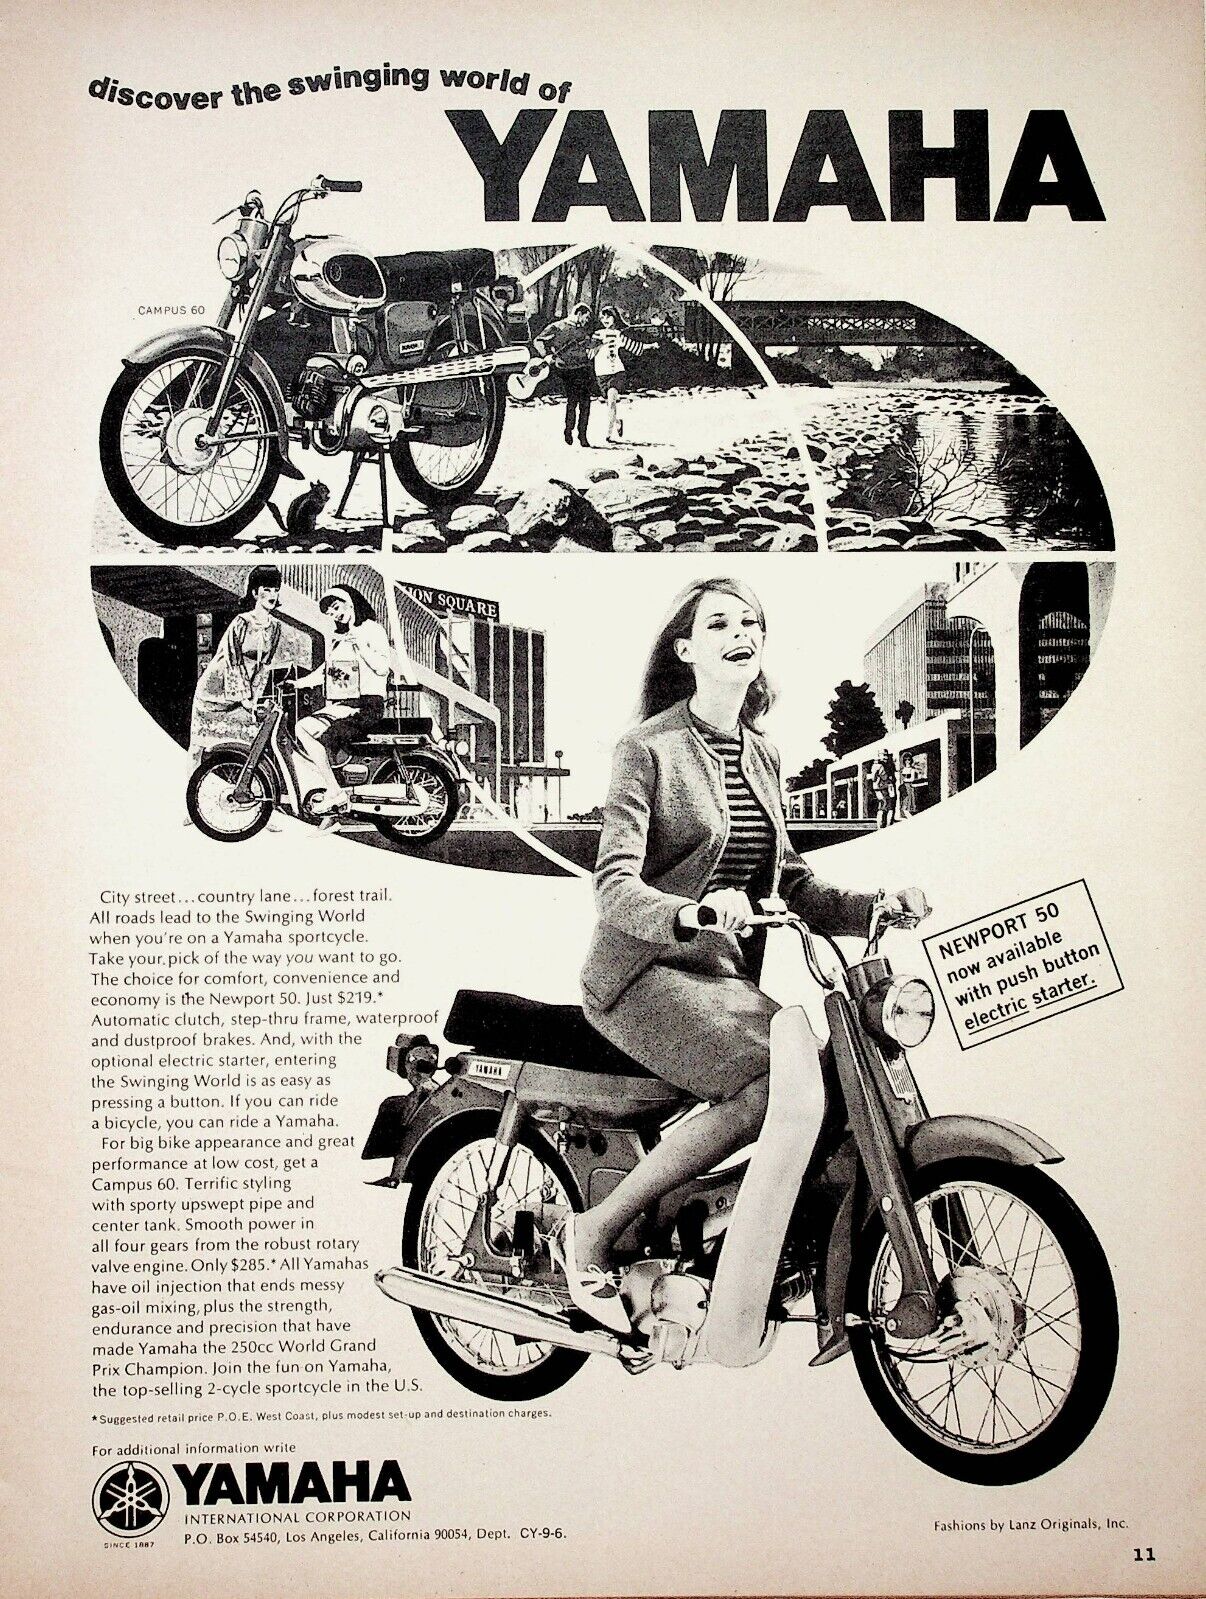 1966 Yamaha Newport 50 And Campus 60 - Vintage Motorcycle Ad